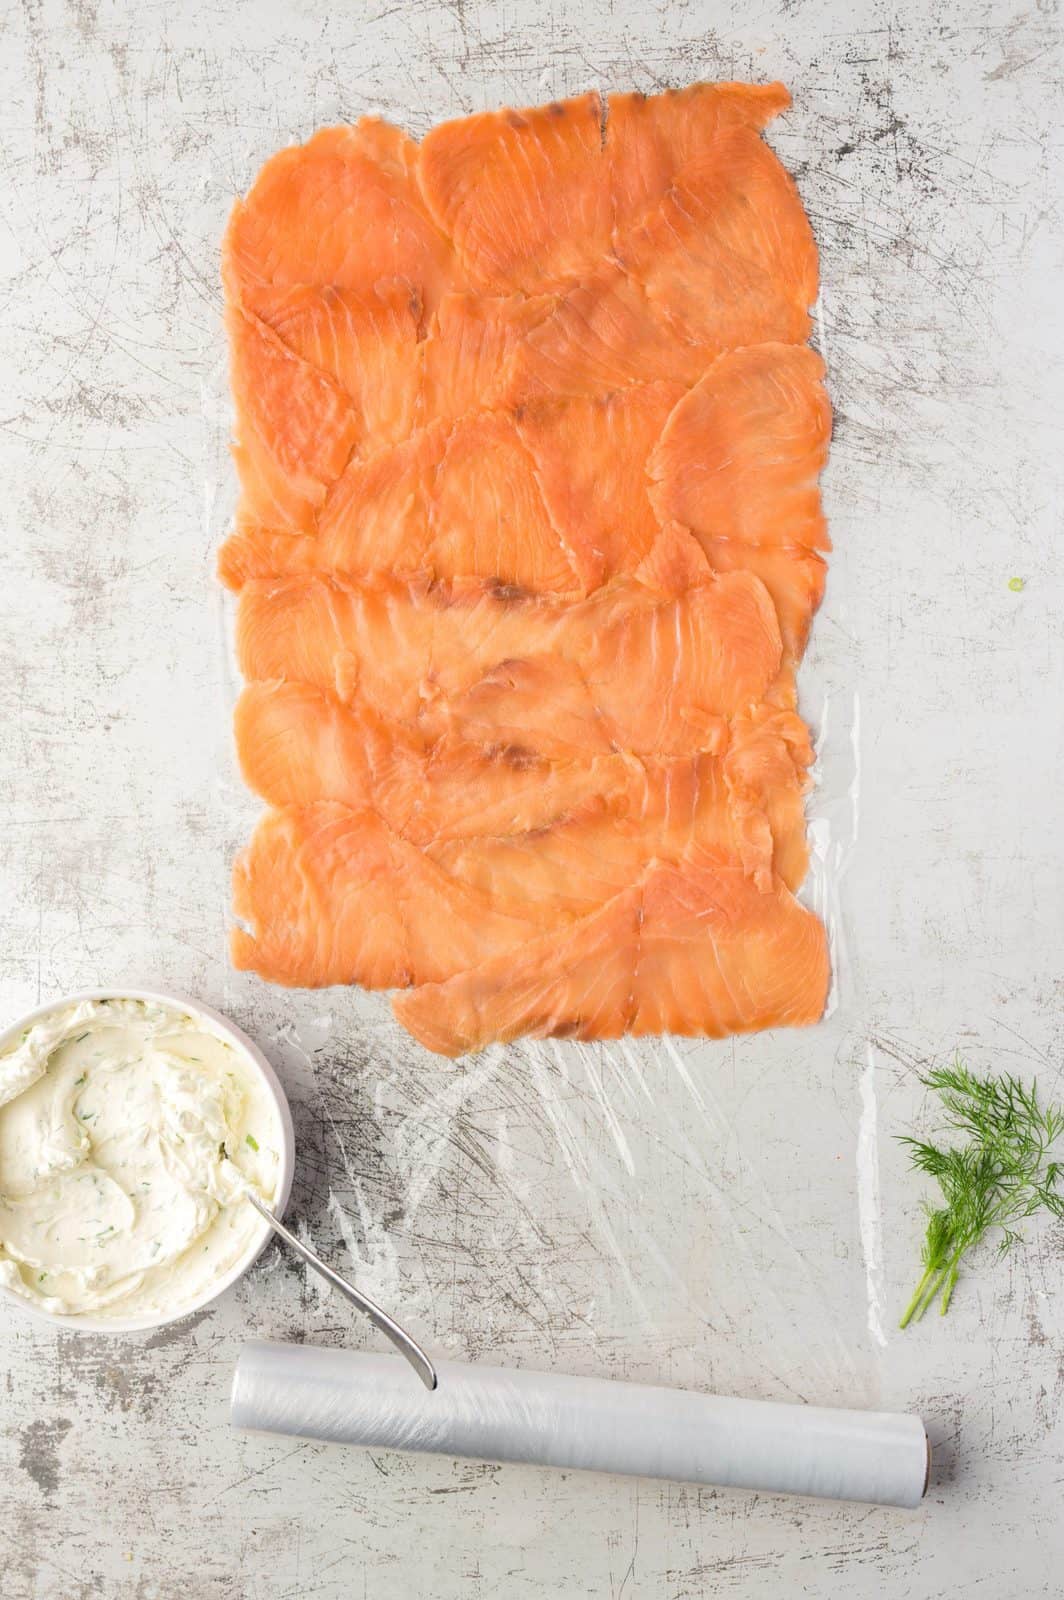 Salmon sliced layered, slightly overlapping on plastic wrap.